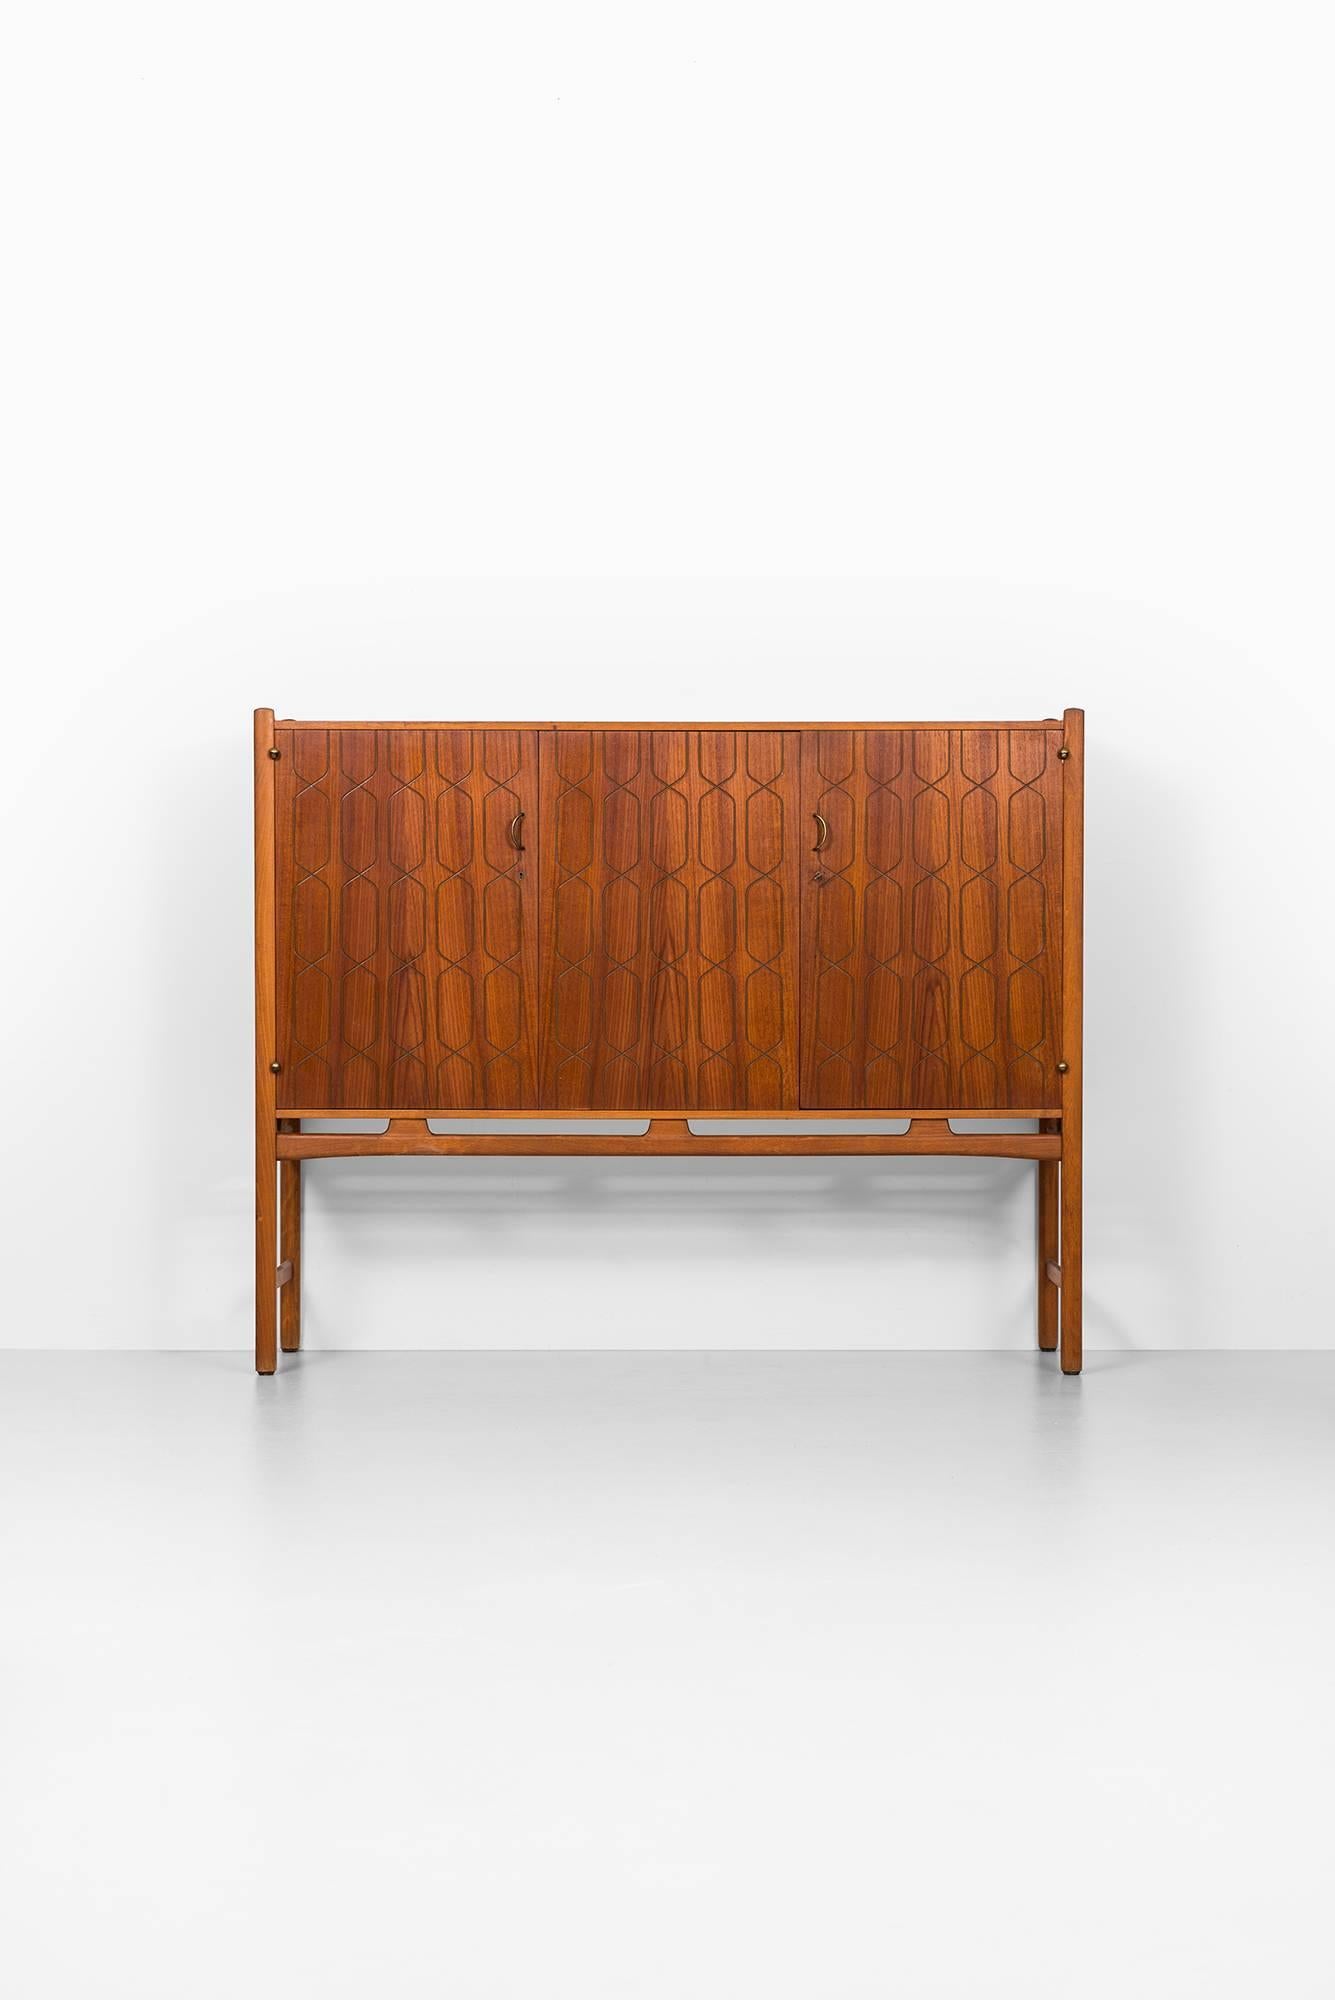 Rare cabinet in teak and mahogany designed by David Rosén. Produced by Nordiska Kompaniet in Sweden.